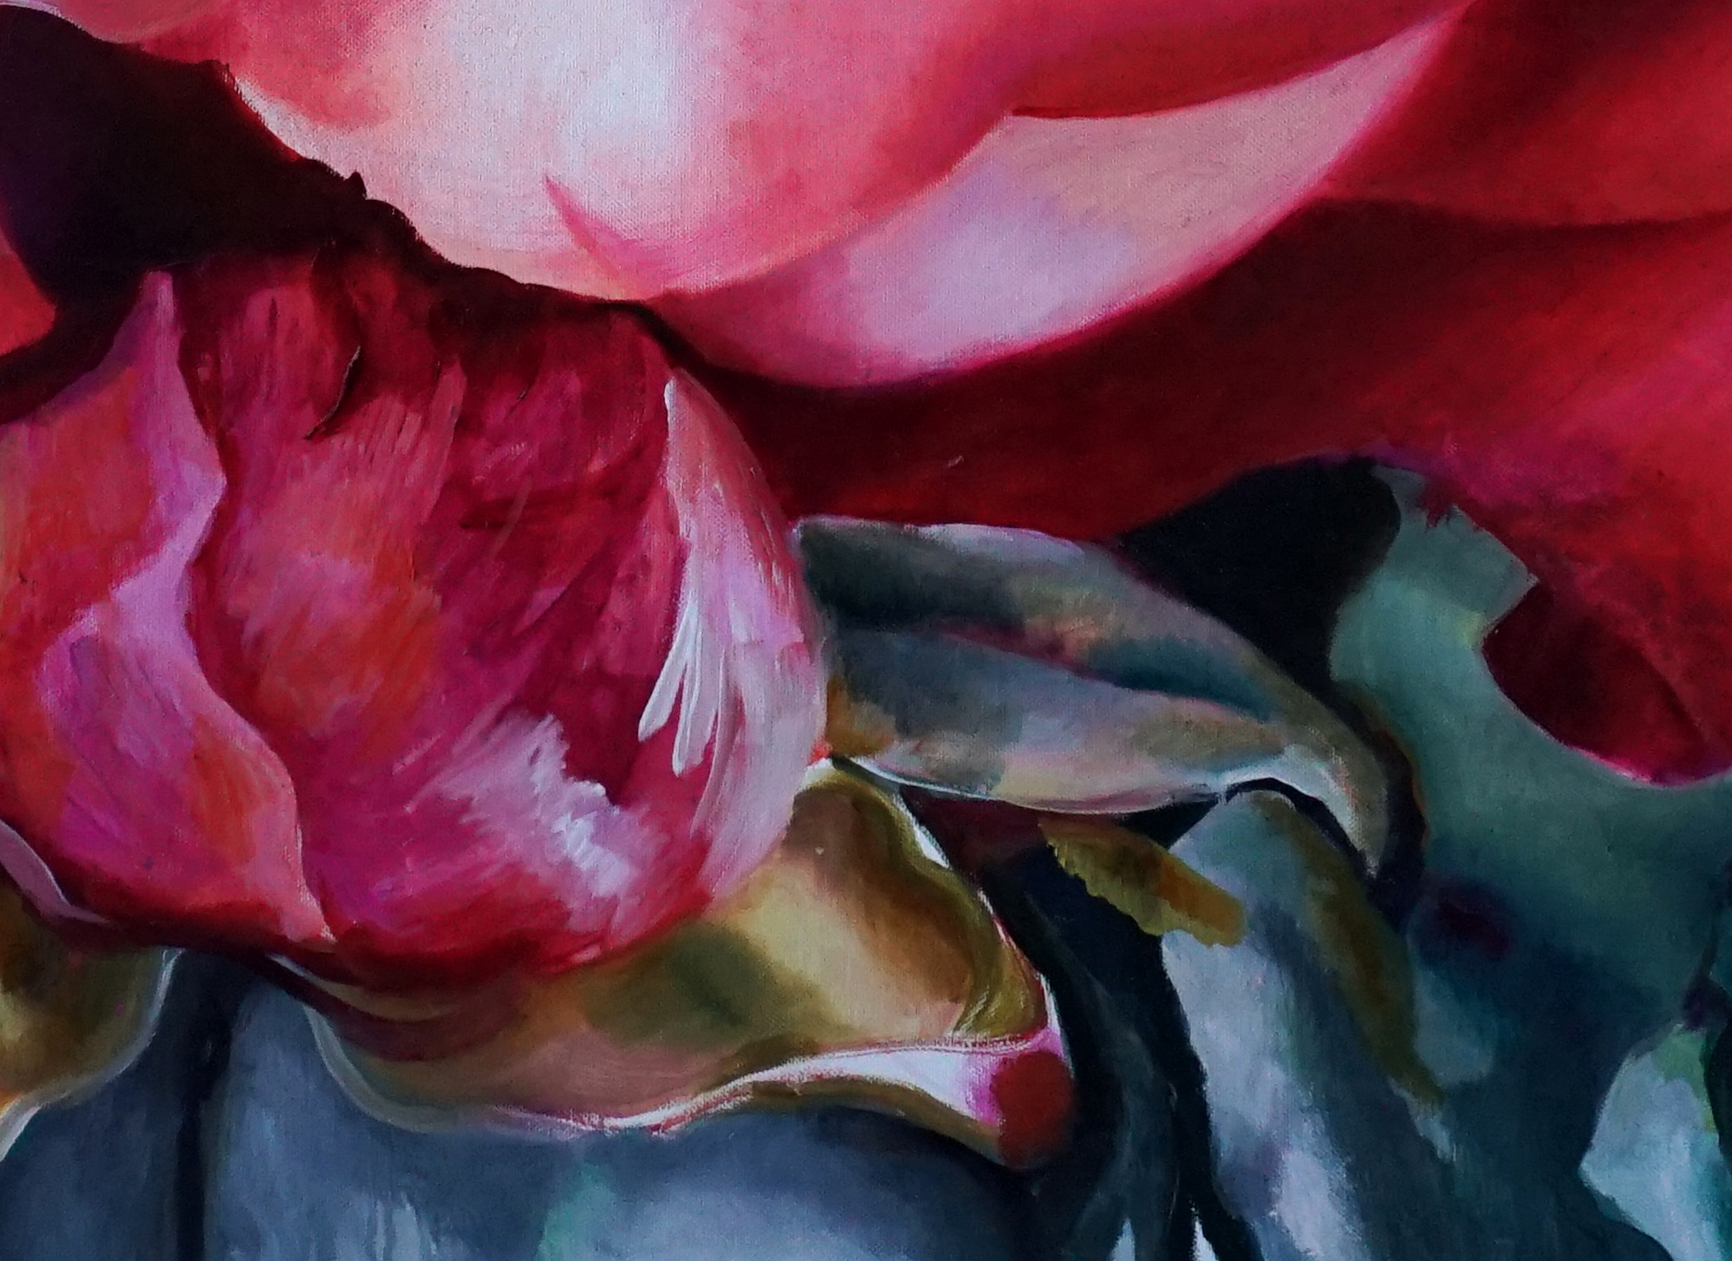 "Rose." Artist Olga Grechina. Painting.